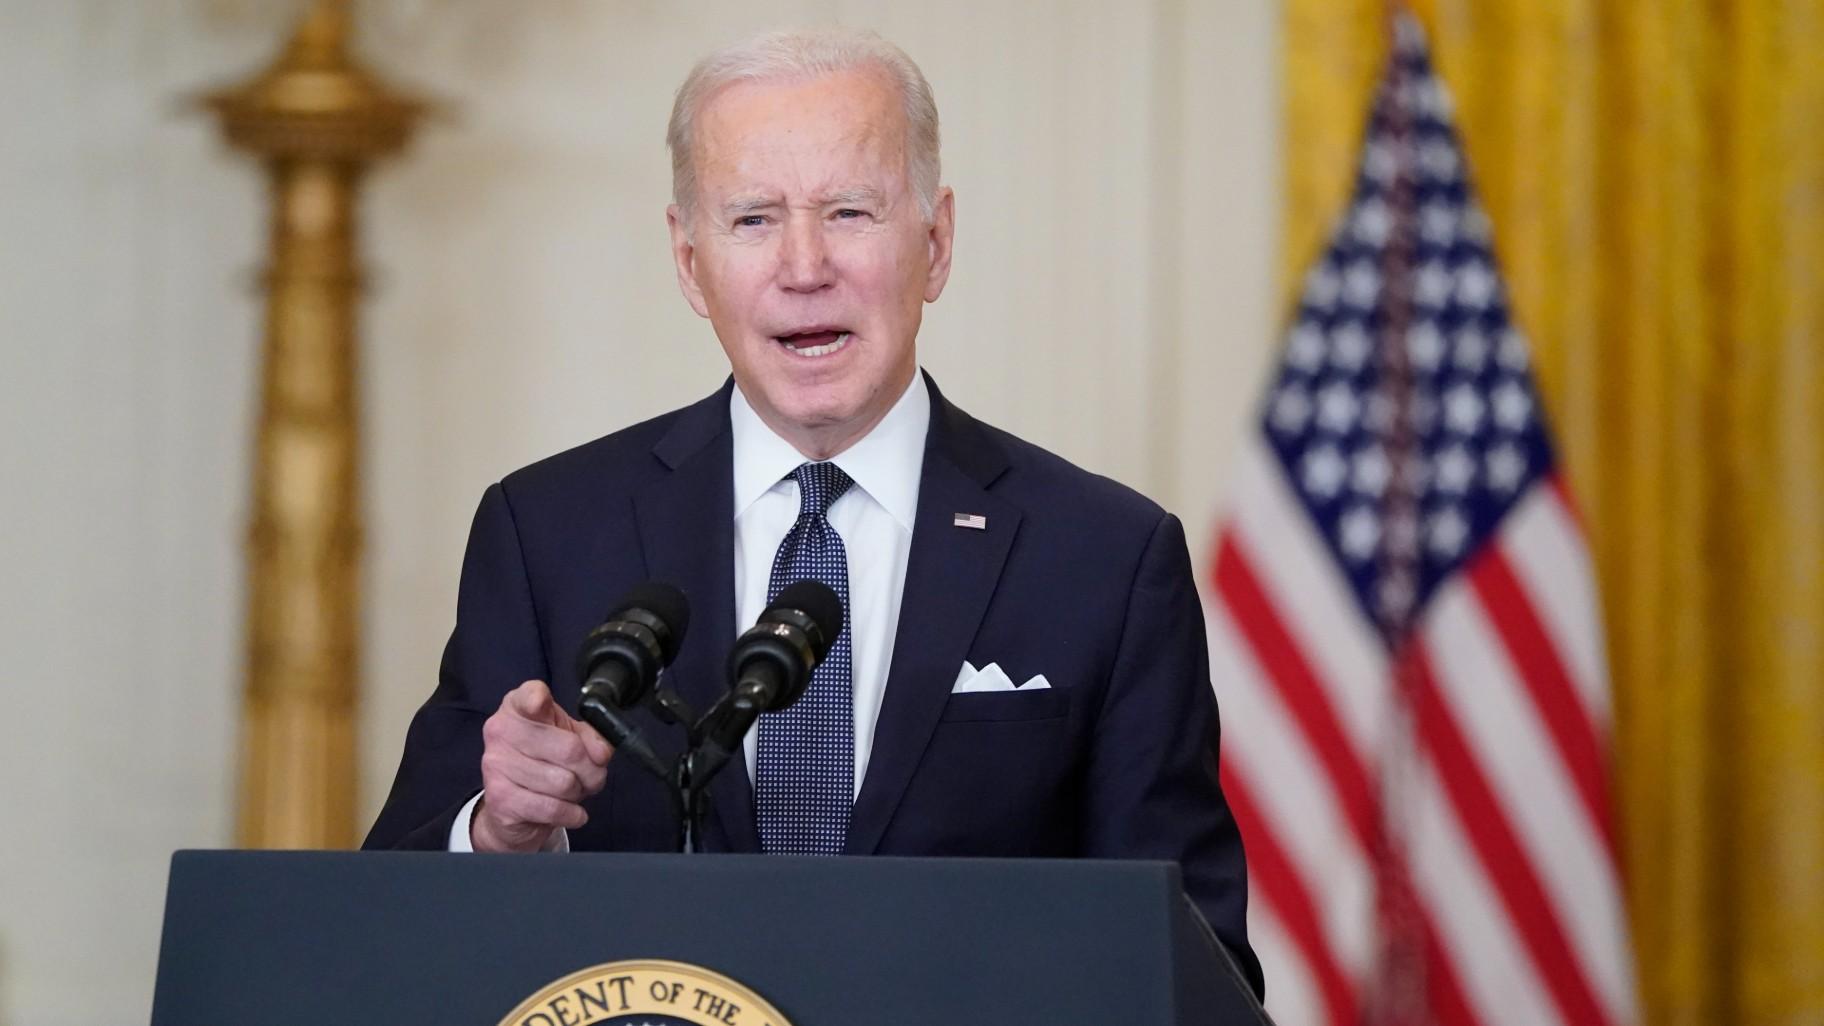 President Joe Biden speaks in the East Room of the White House, on Feb. 15, 2022, in Washington. (AP Photo / Alex Brandon)